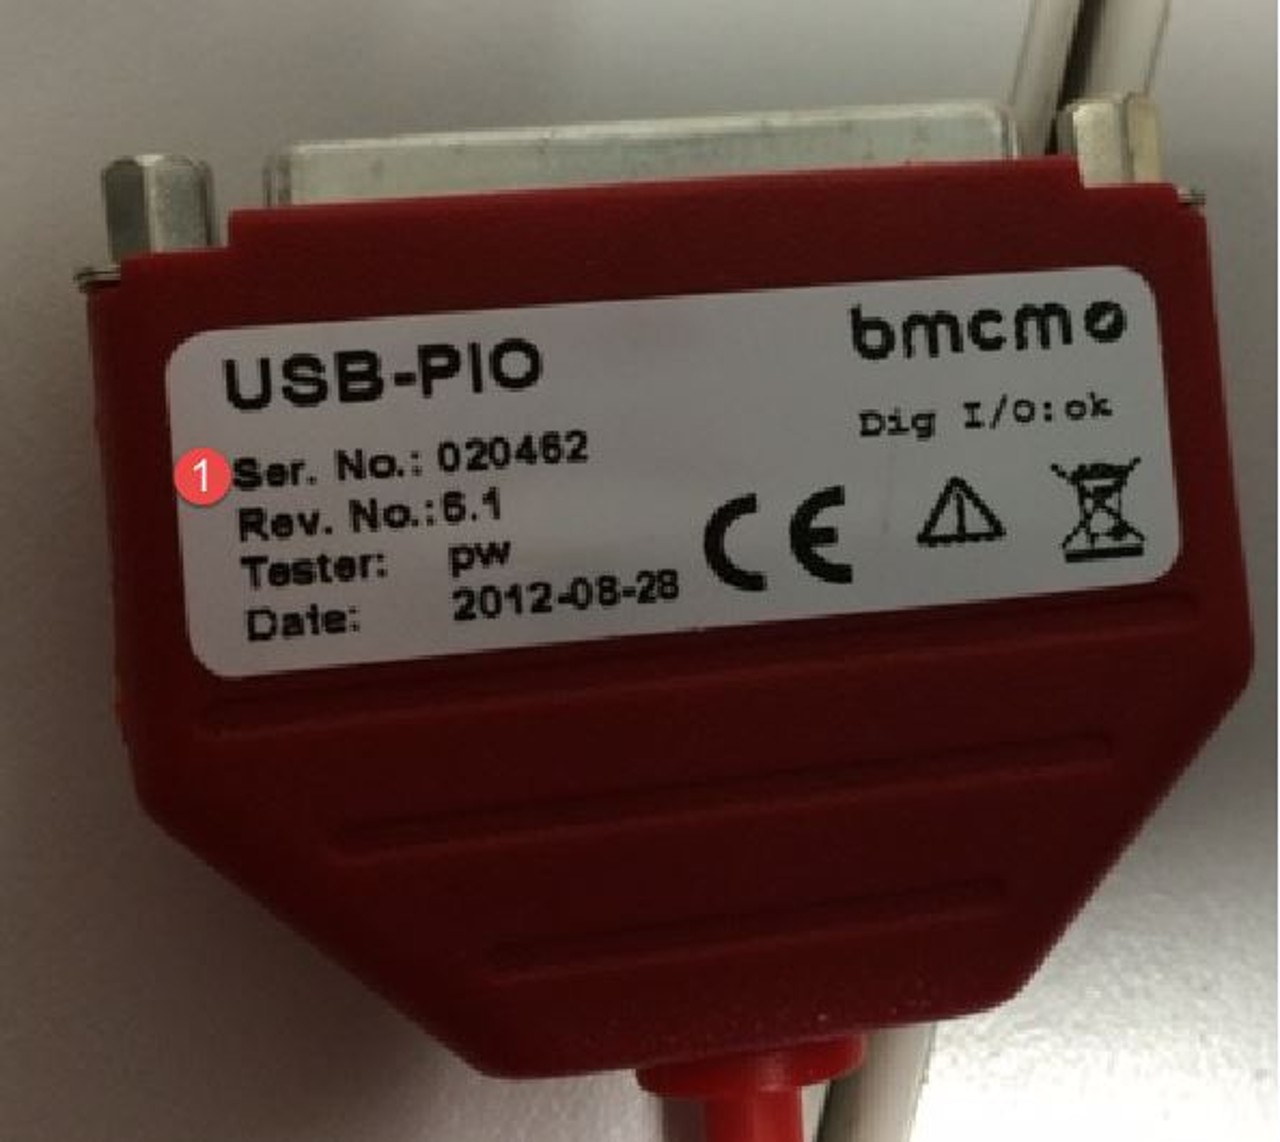 EMC32-S: Error 2804 with meM-PIO USB device